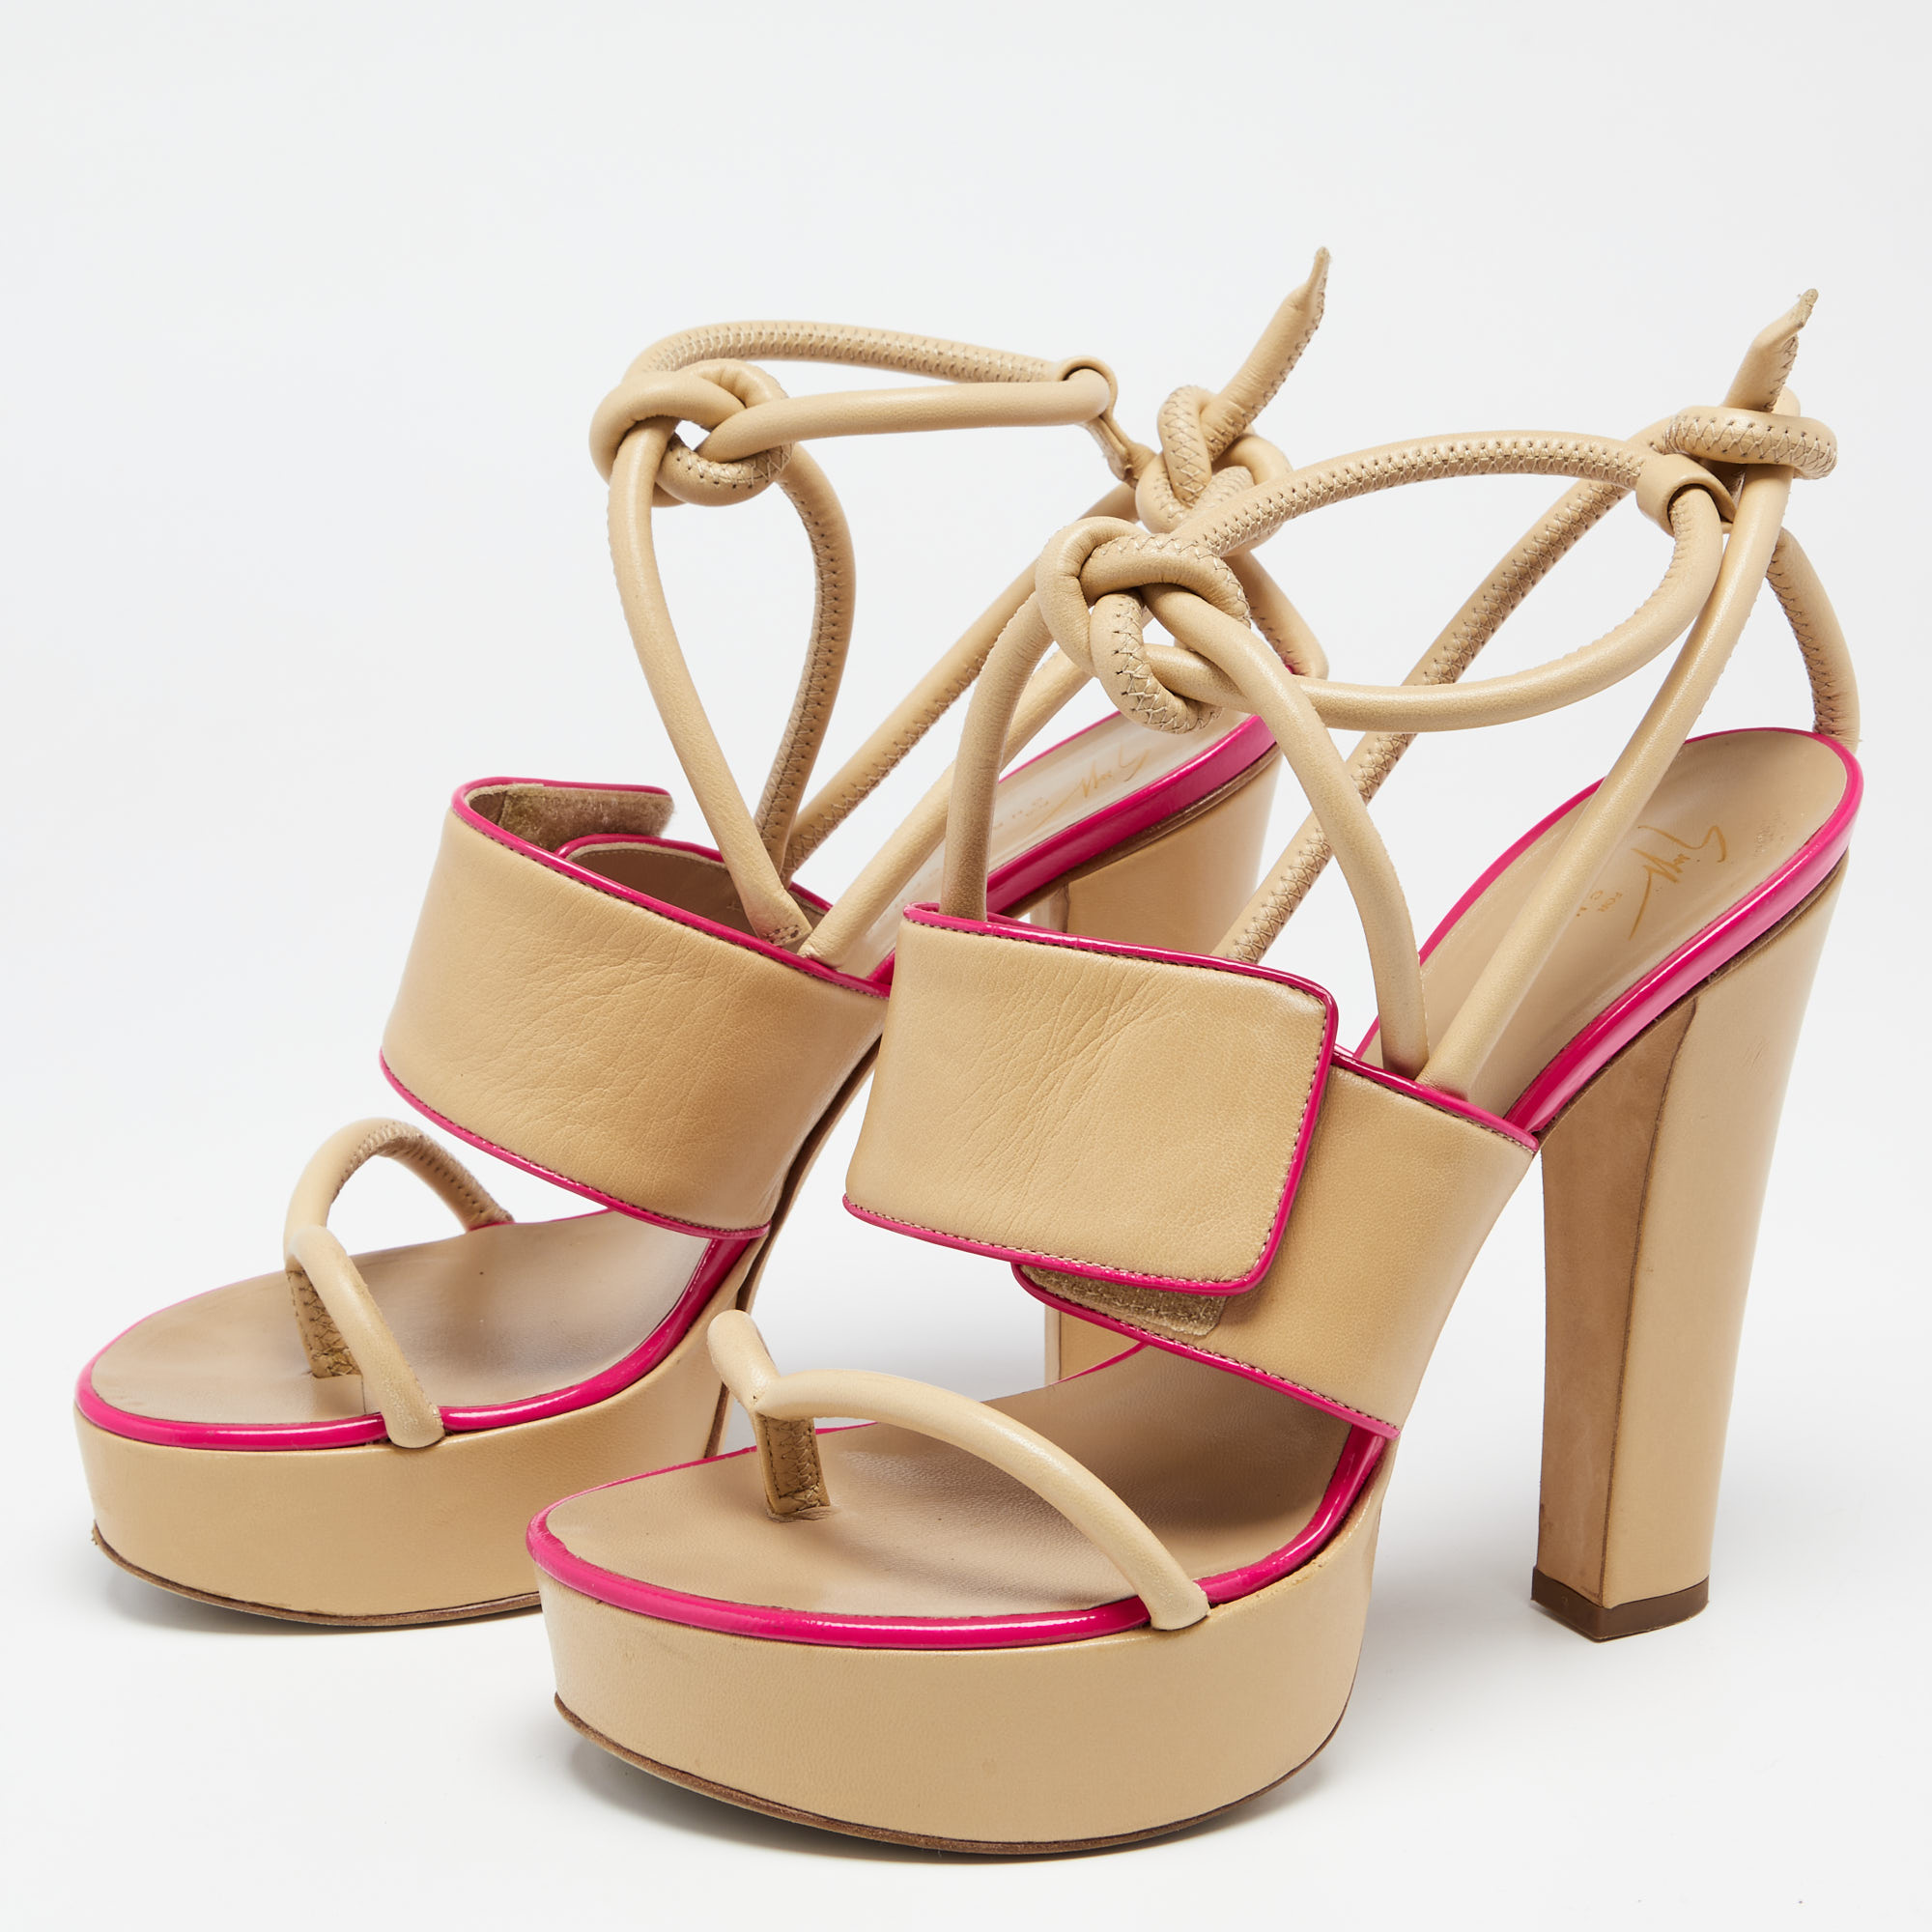 

Giuseppe Zanotti x Christopher Kane Beige/Pink Leather Block Heel Platform Sandals Size